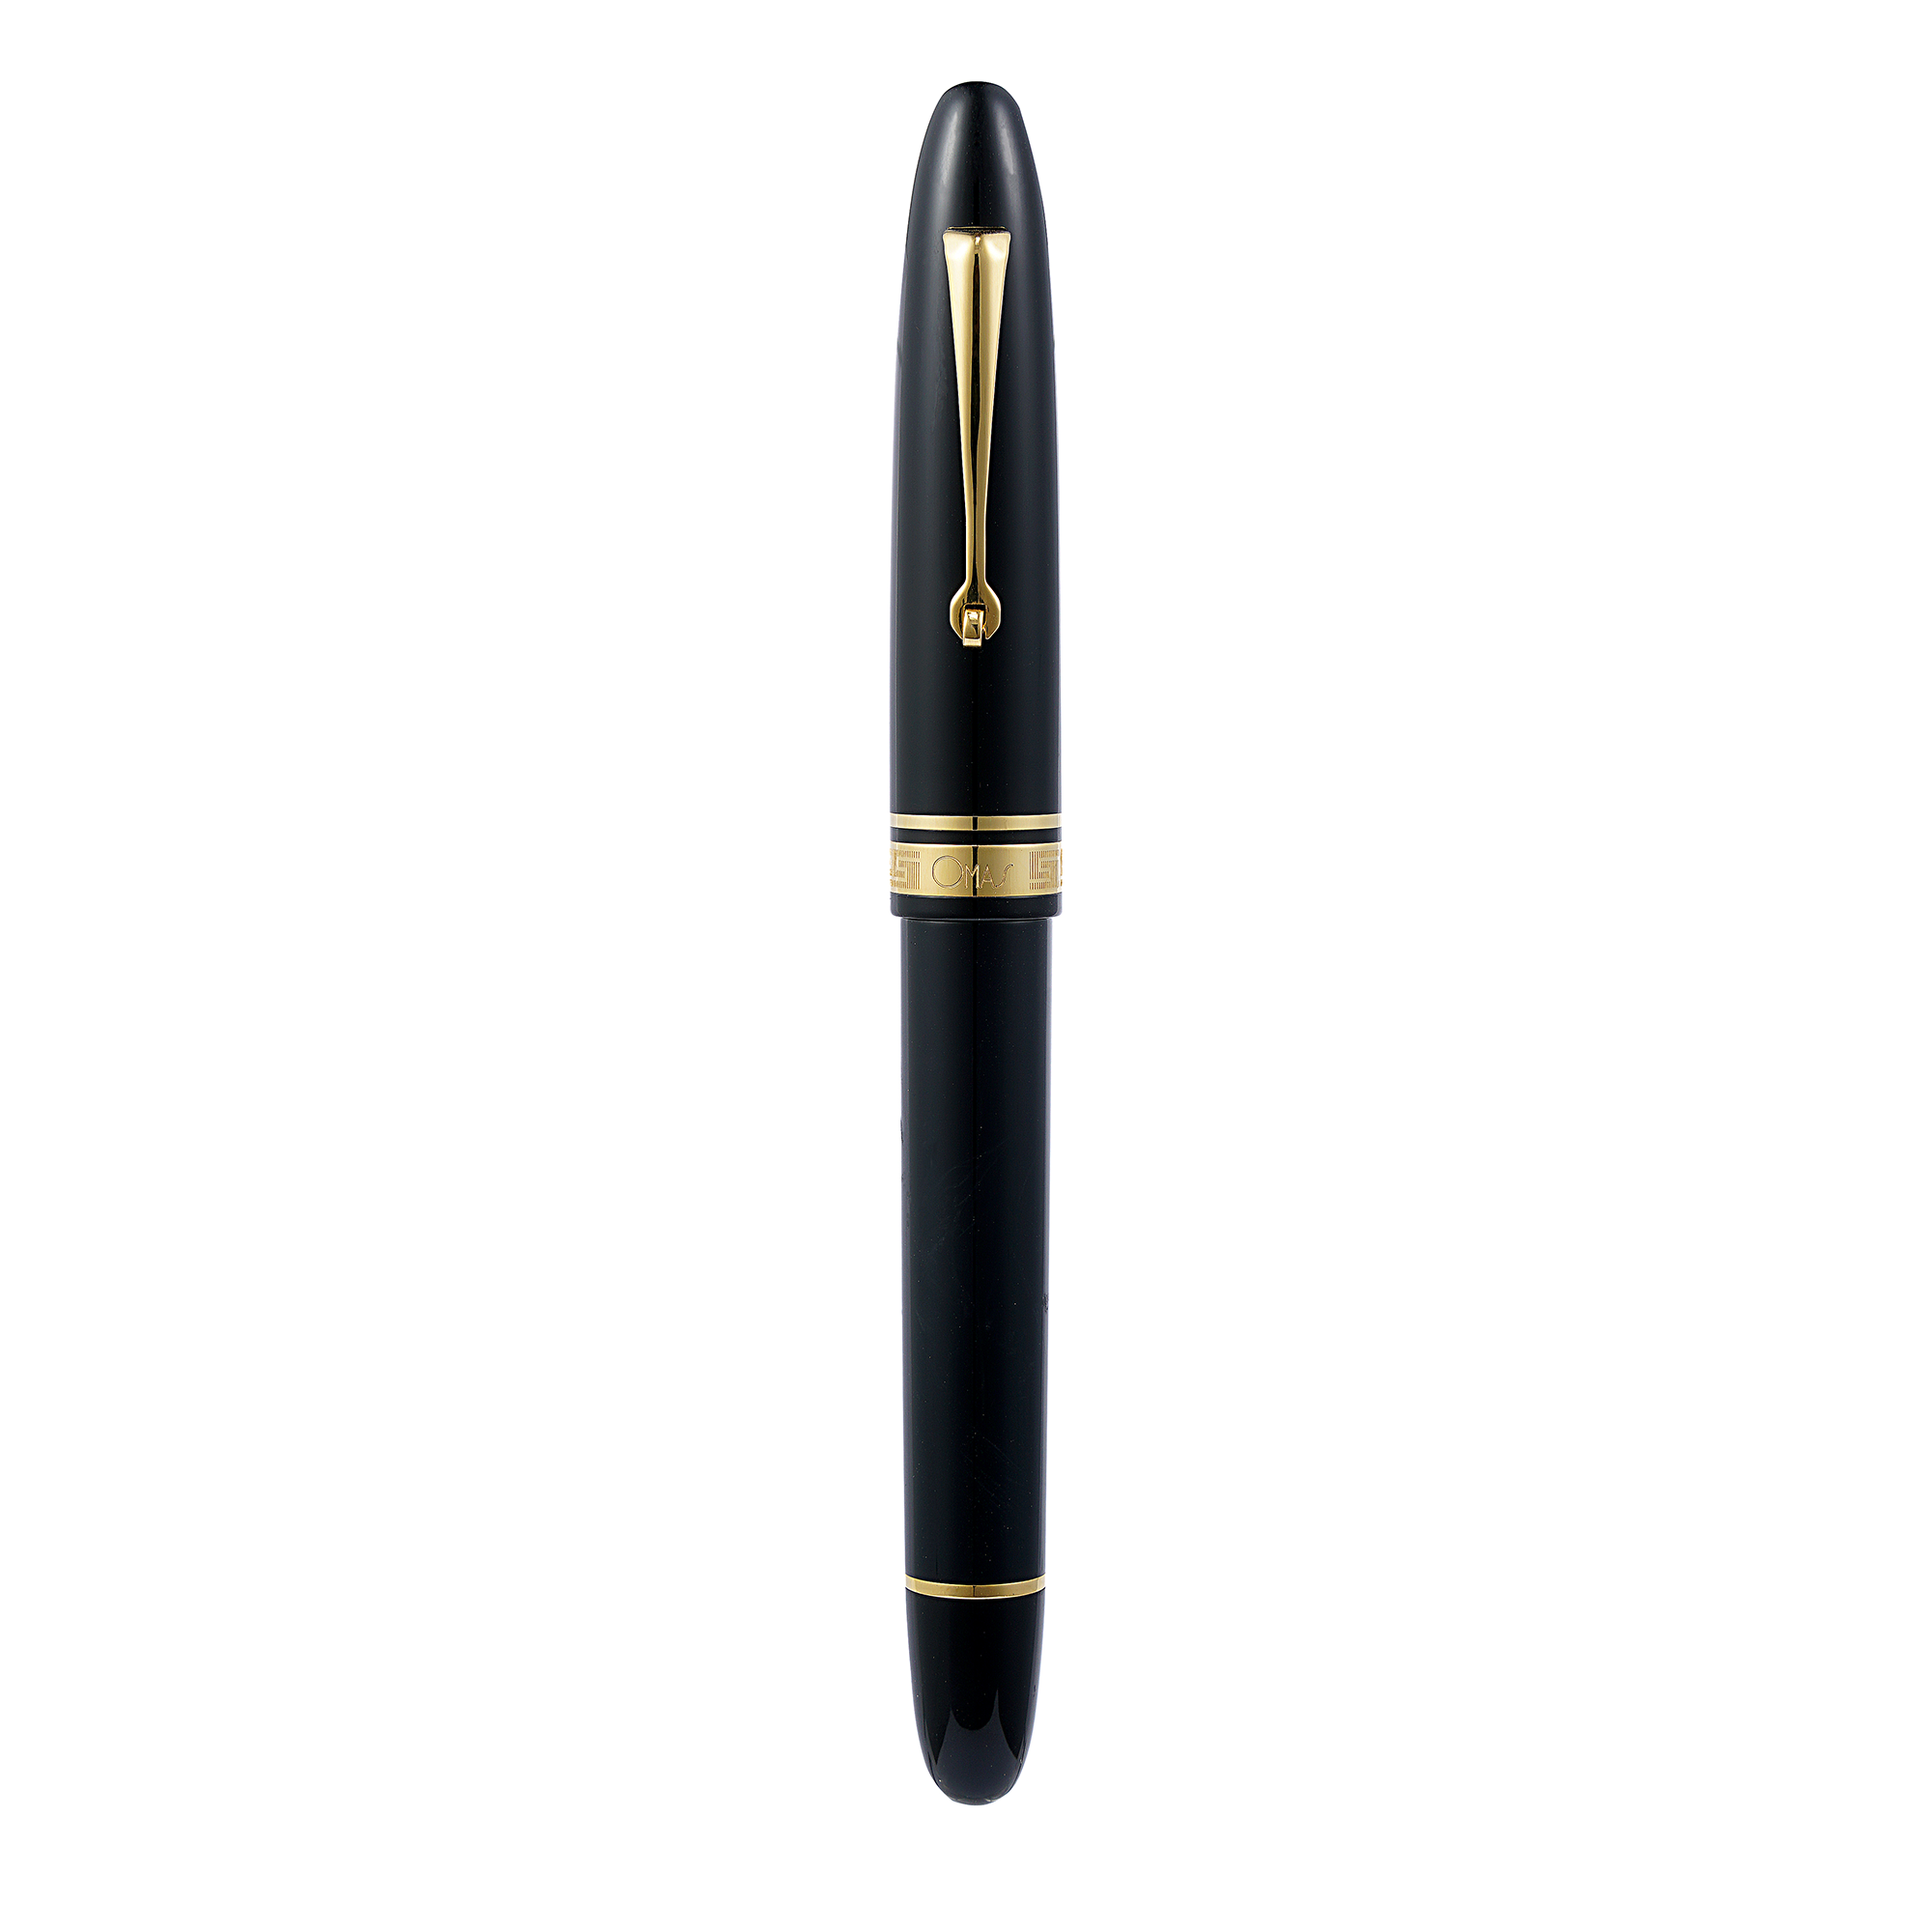 Omas Ogiva Nera Gold Trim Fountain Pen - Pencraft the boutique